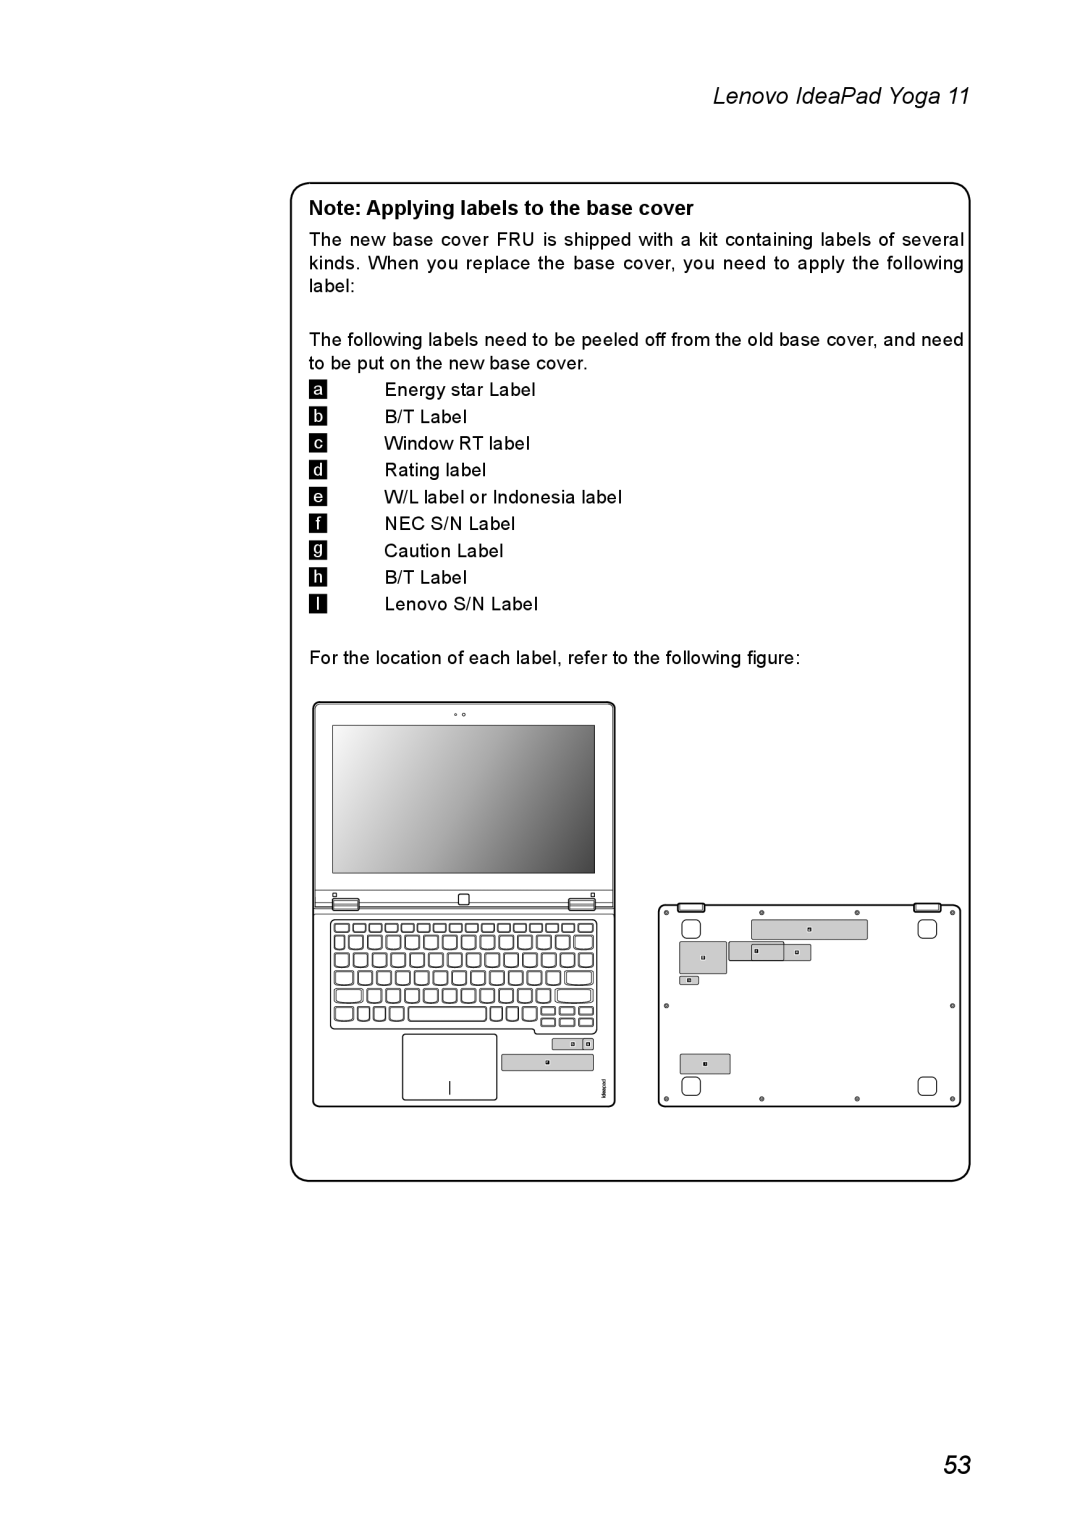 Lenovo 11 manual Note Applying labels to the base cover, Lenovo IdeaPad Yoga 